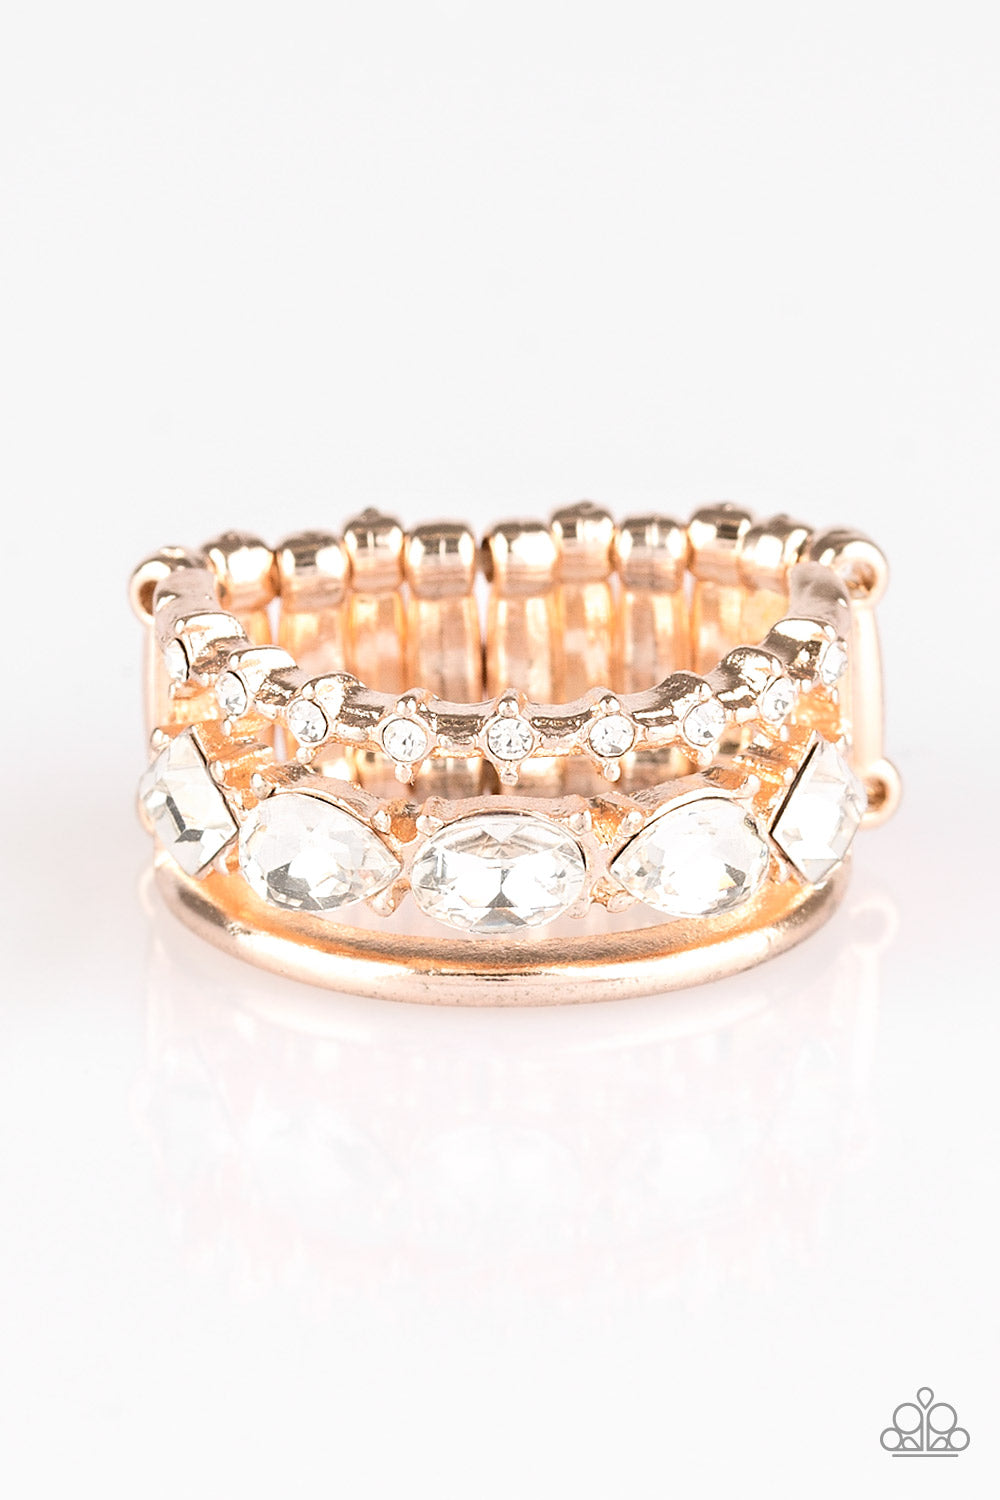 Paparazzi Backstage Sparkle - Rose Gold - White Rhinestones - Ring - $5 Jewelry With Ashley Swint